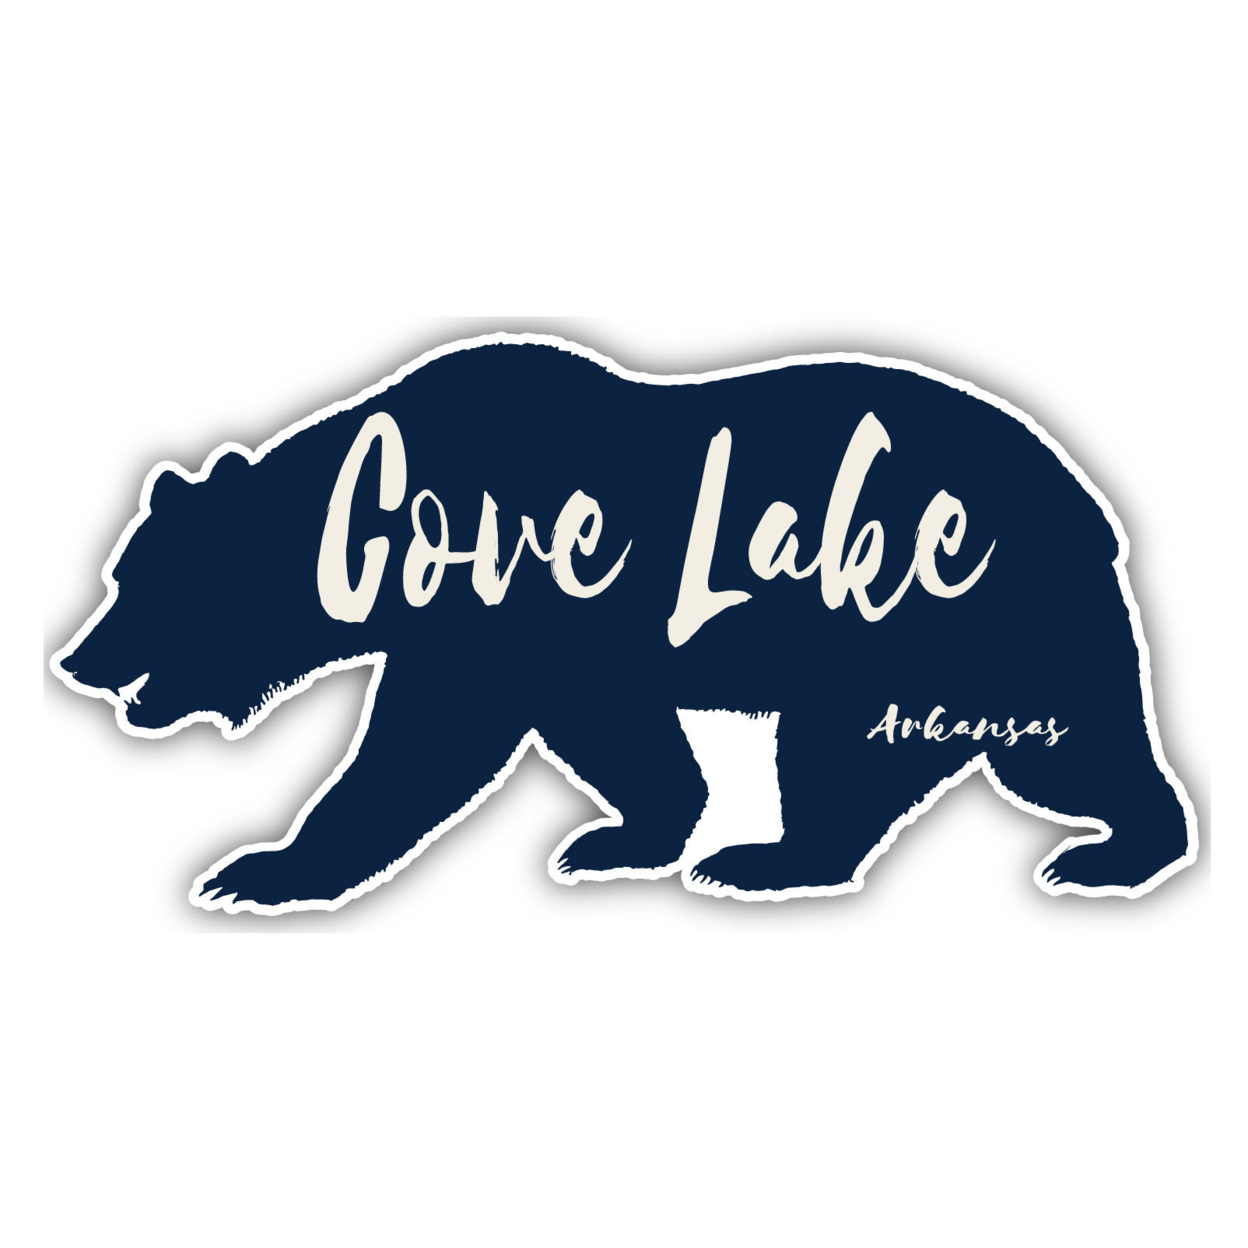 Cove Lake Arkansas Souvenir Decorative Stickers (Choose Theme And Size) - Single Unit, 4-Inch, Bear